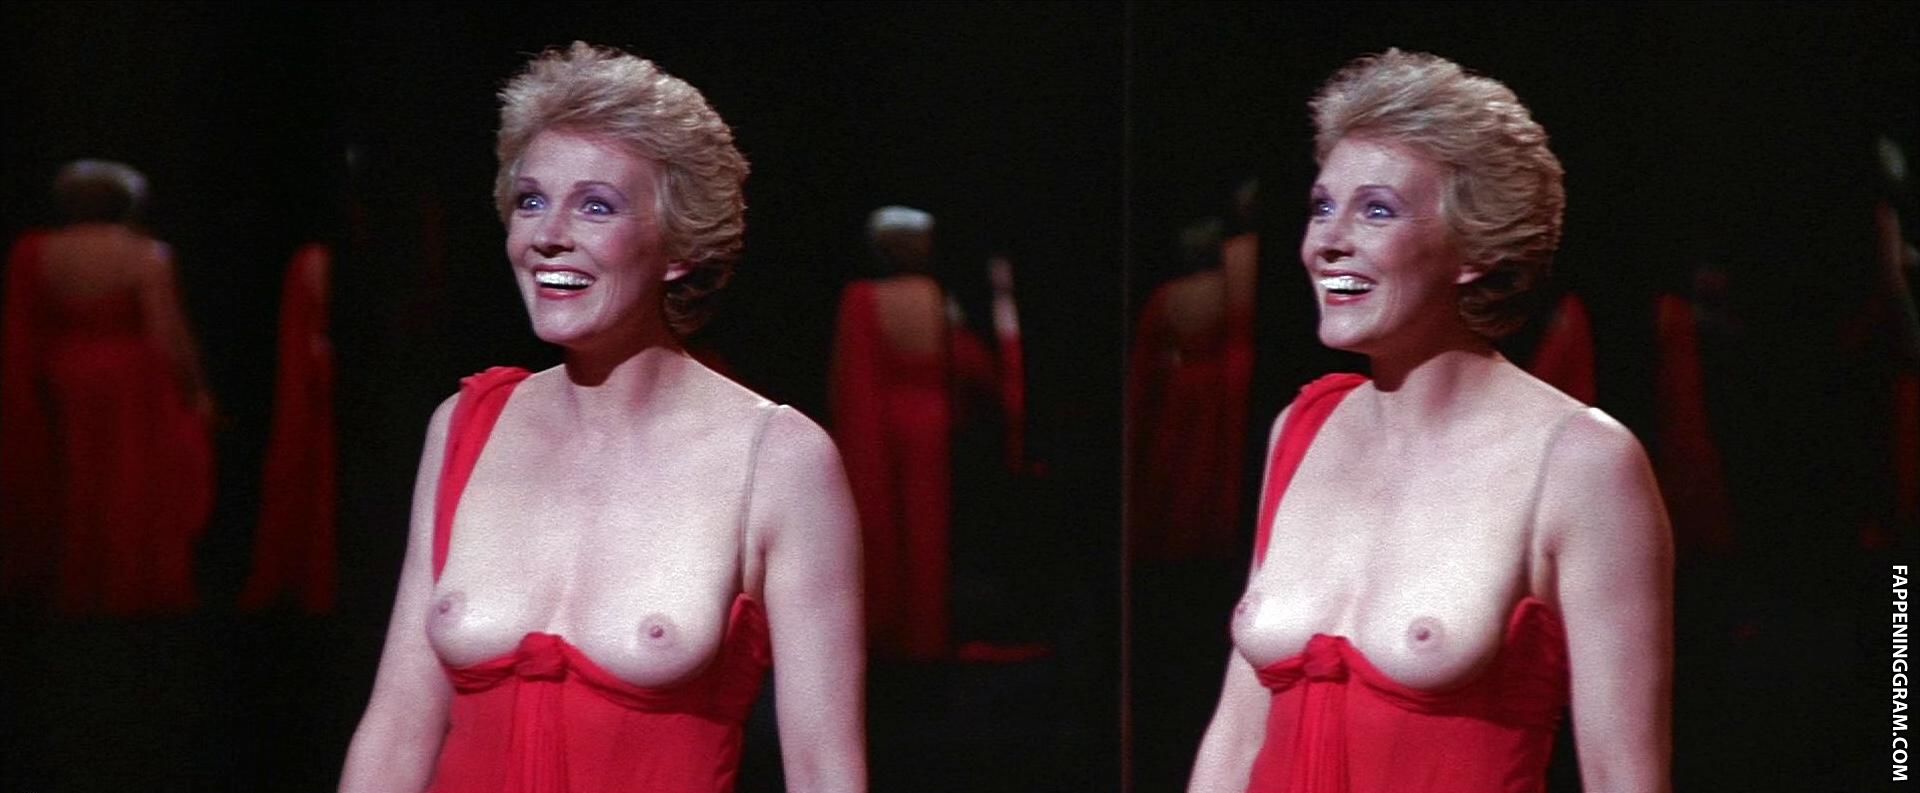 Julie Andrews Nude The Fappening - FappeningGram